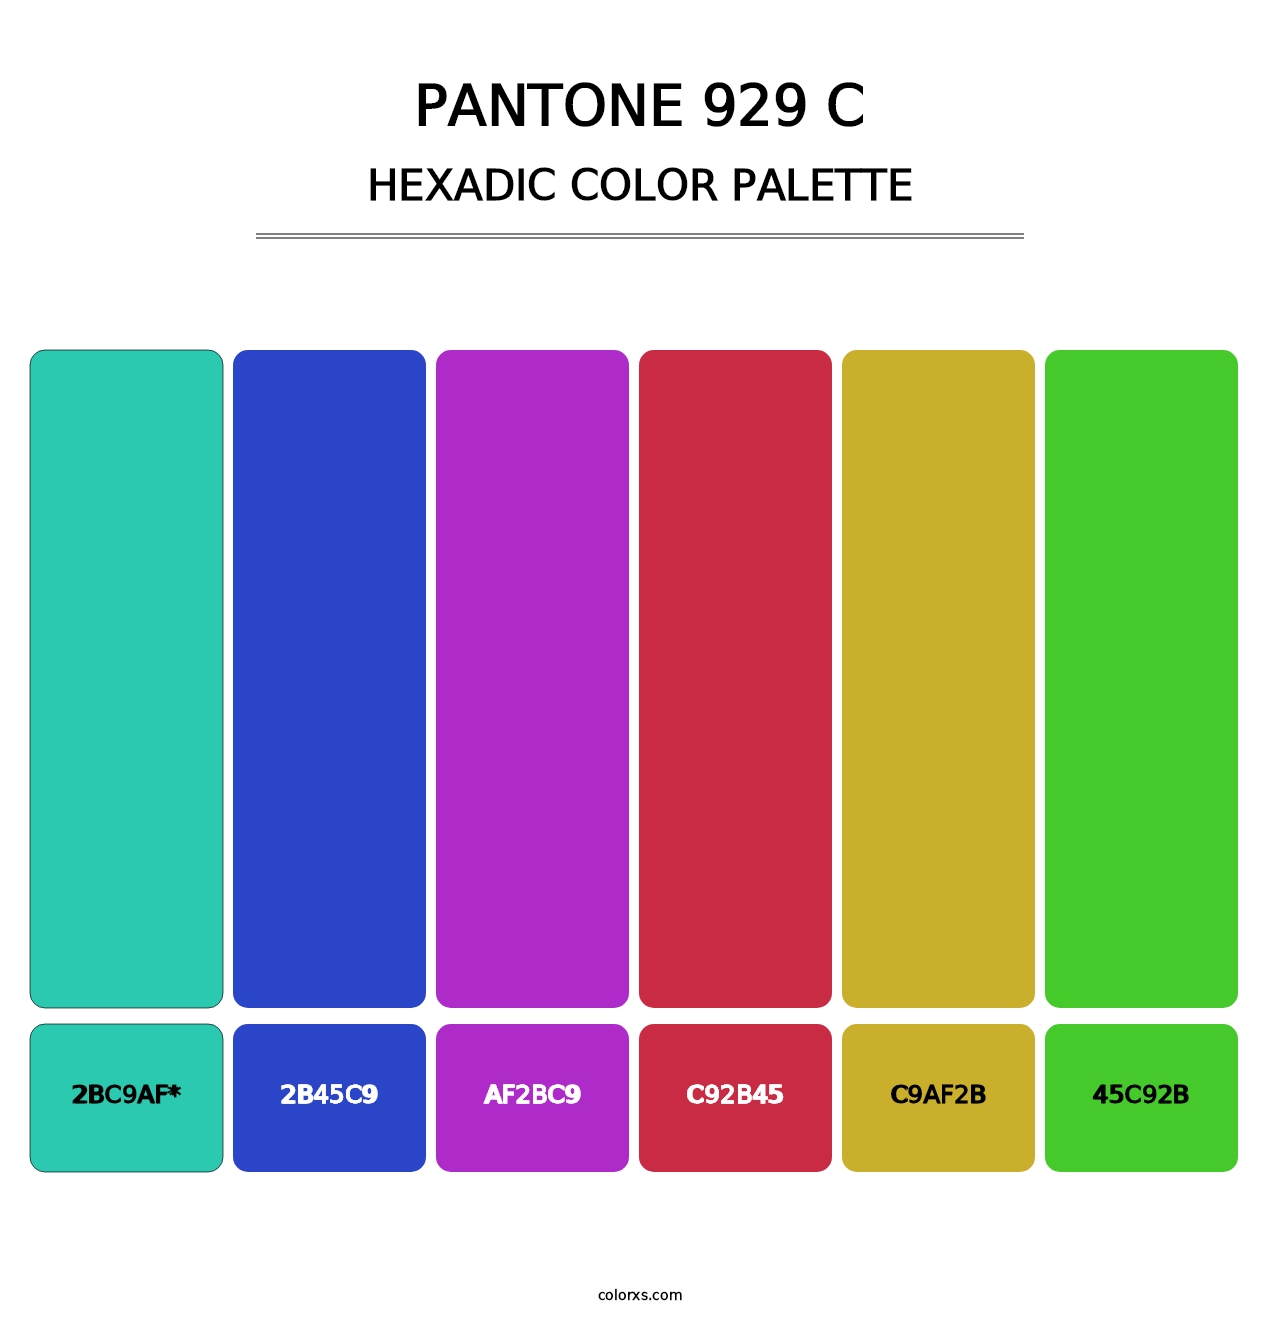 PANTONE 929 C - Hexadic Color Palette